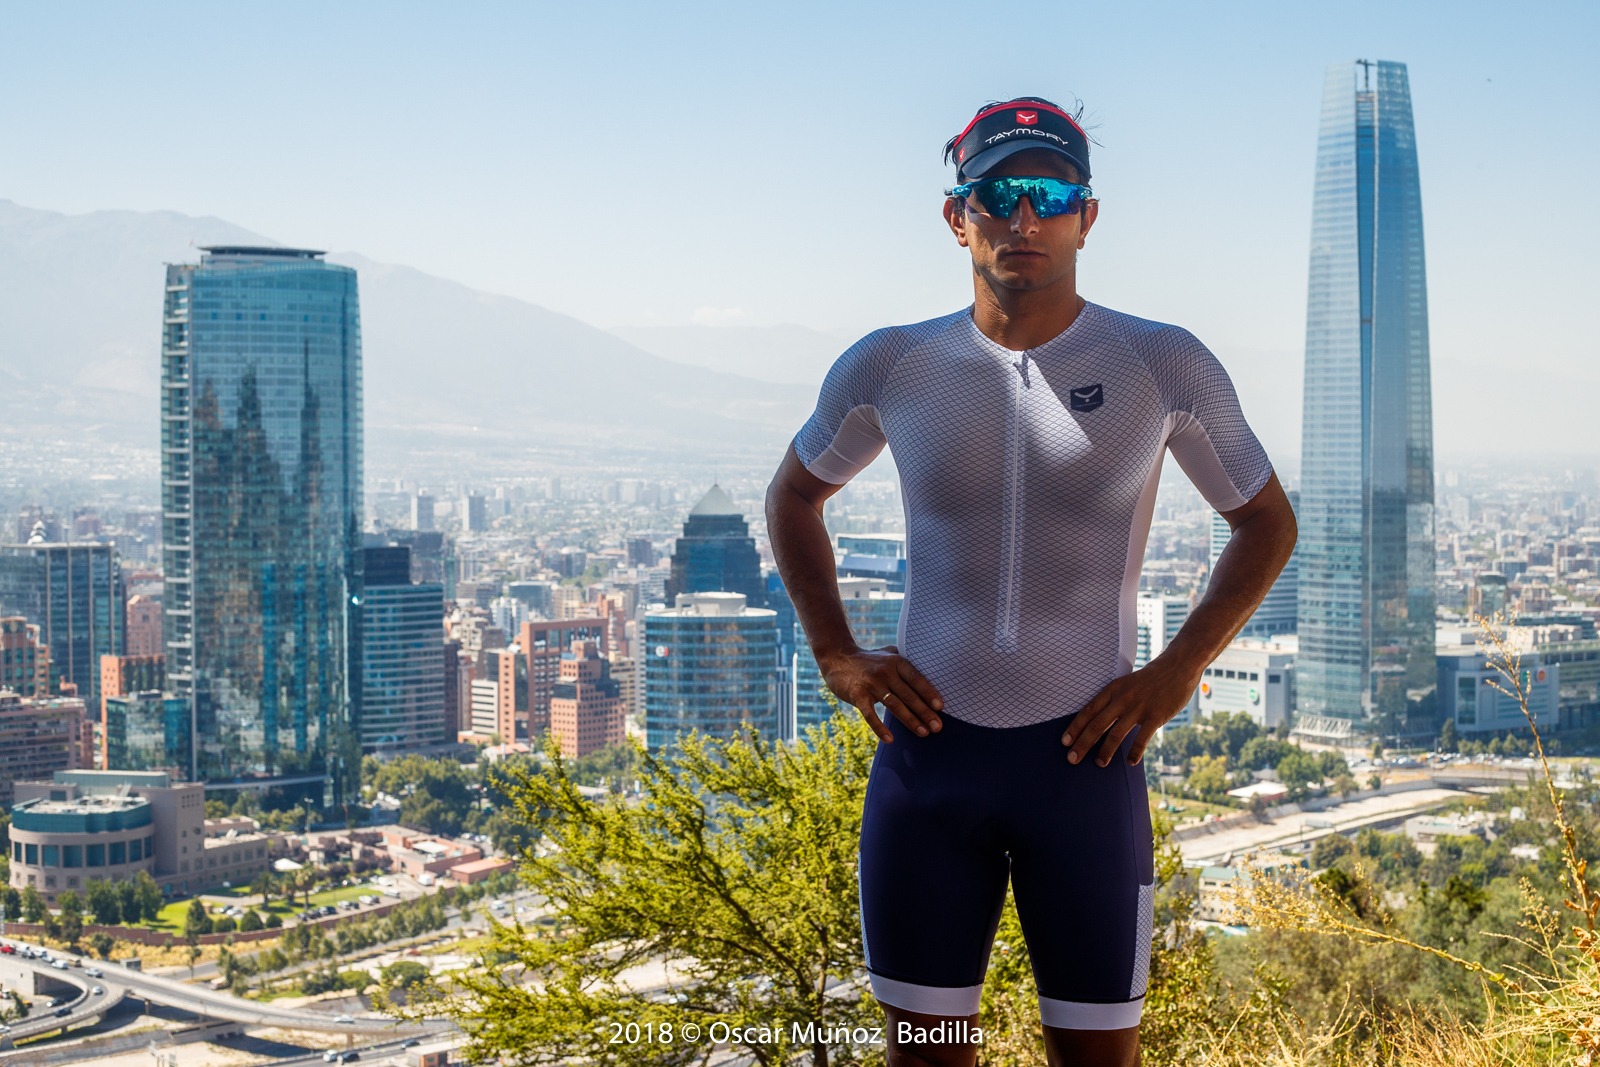 Entrevist Omar Tayara, Triatleta Olímpico. Reinventándose paso a paso 